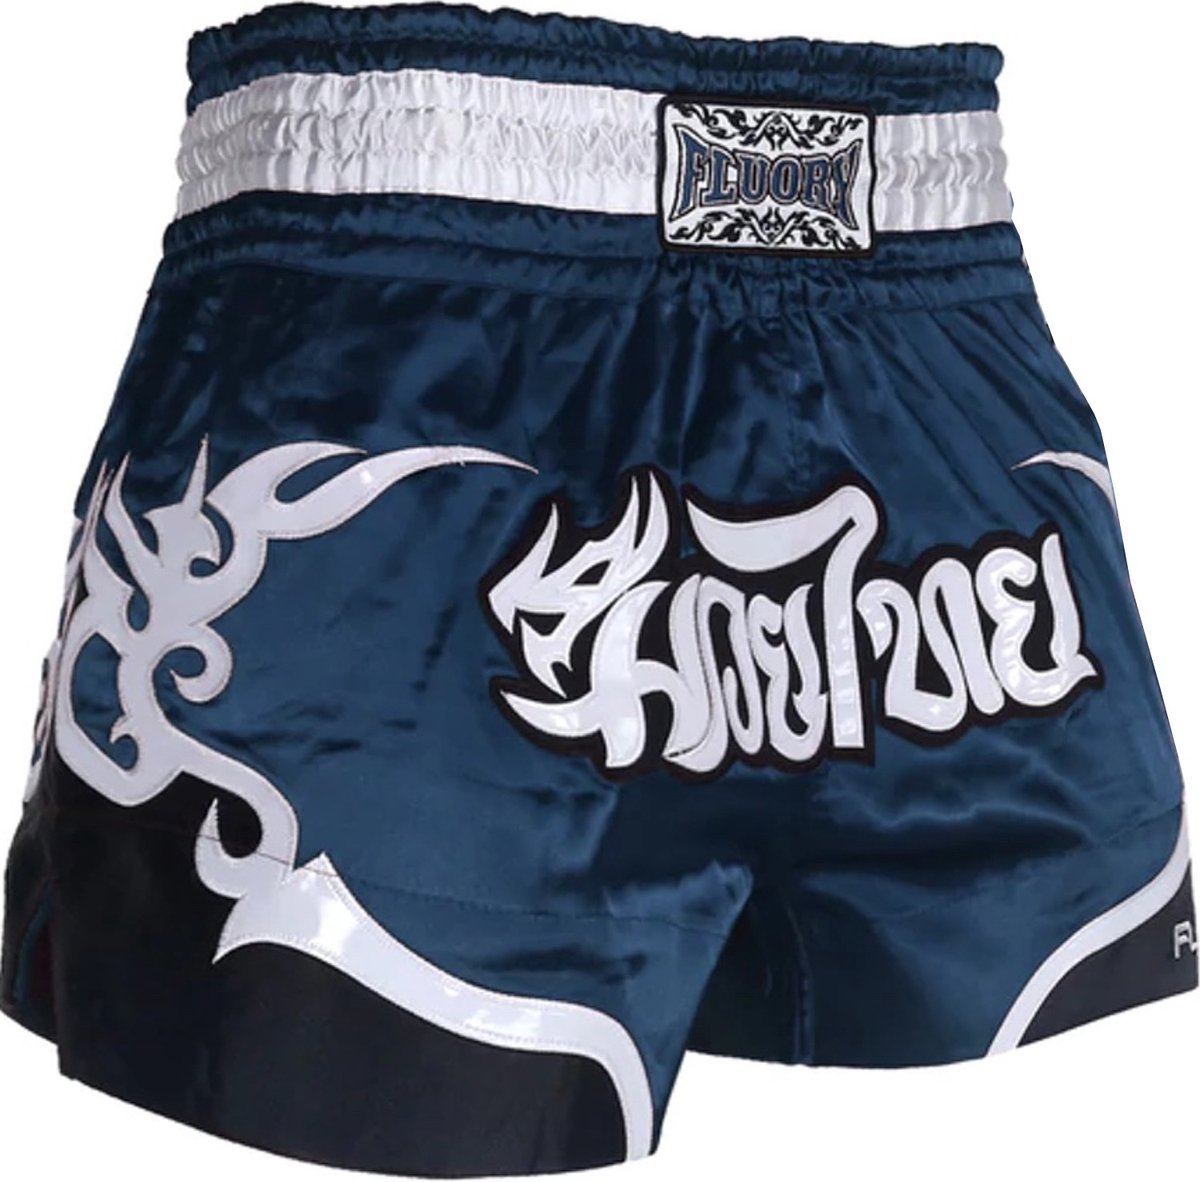 Fluory Muay Thai Short Kickboks Broek Tribal Donkerblauw maat XL